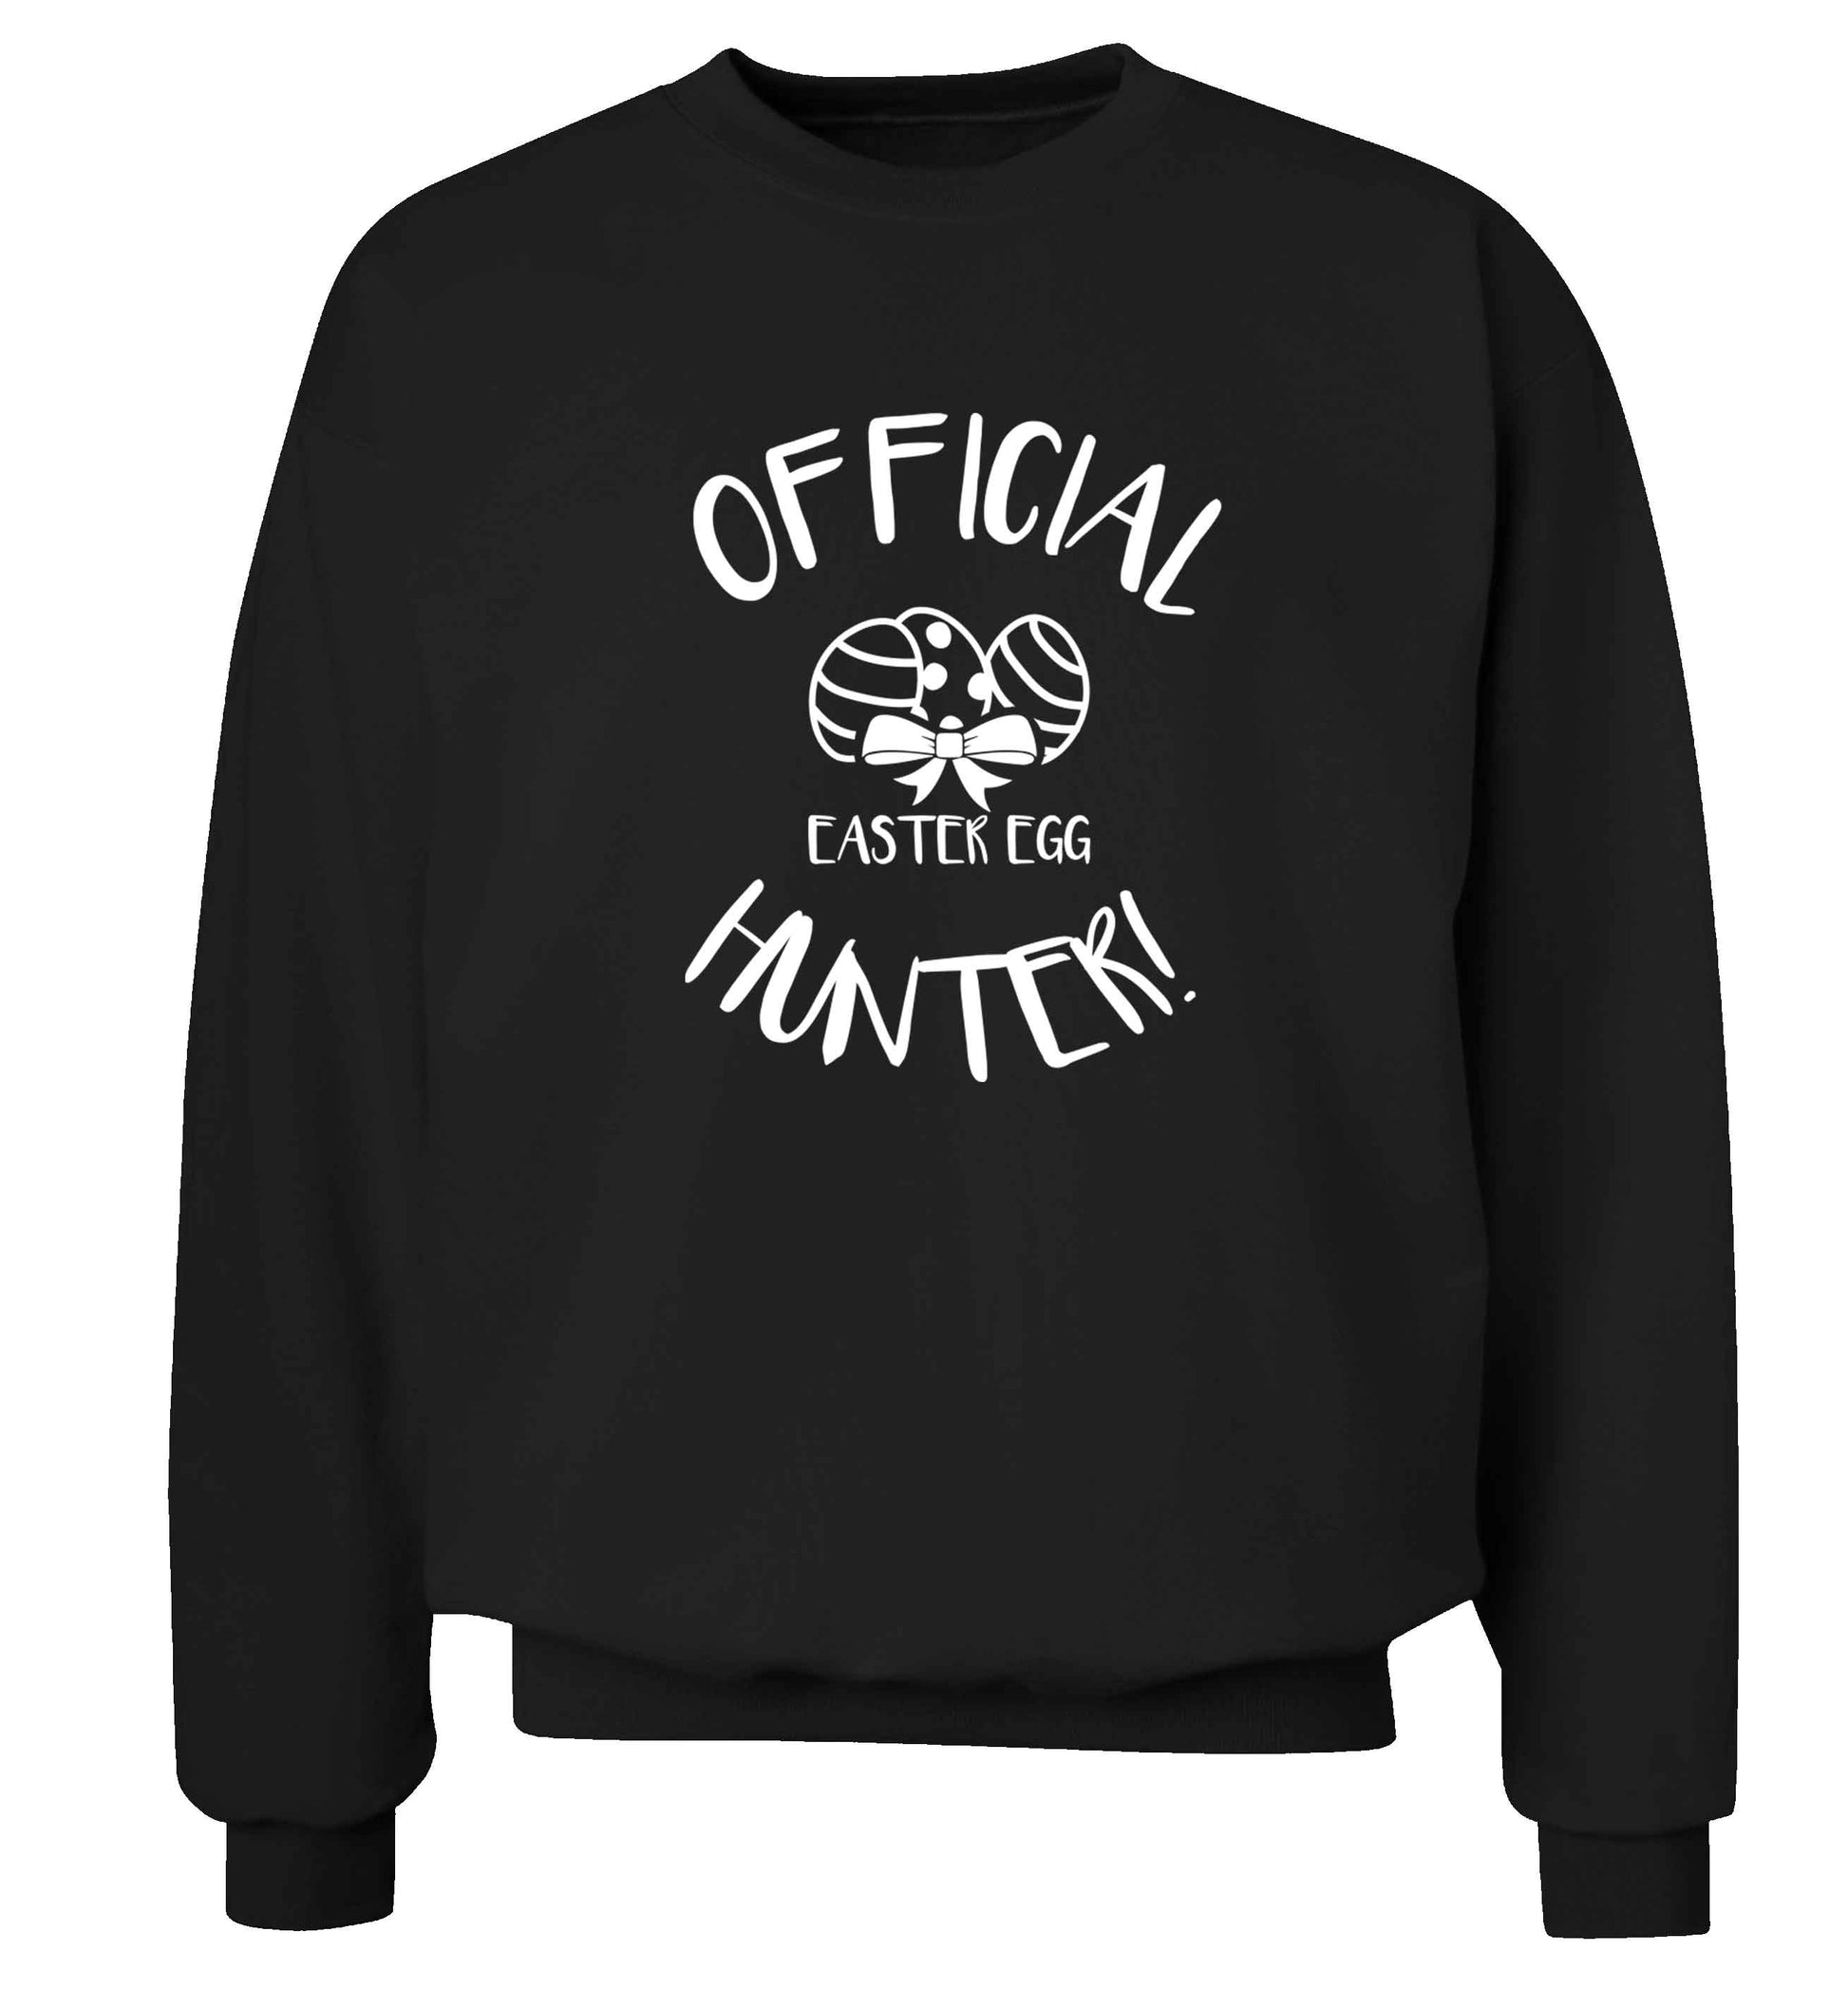 Official Easter egg hunter! adult's unisex black sweater 2XL